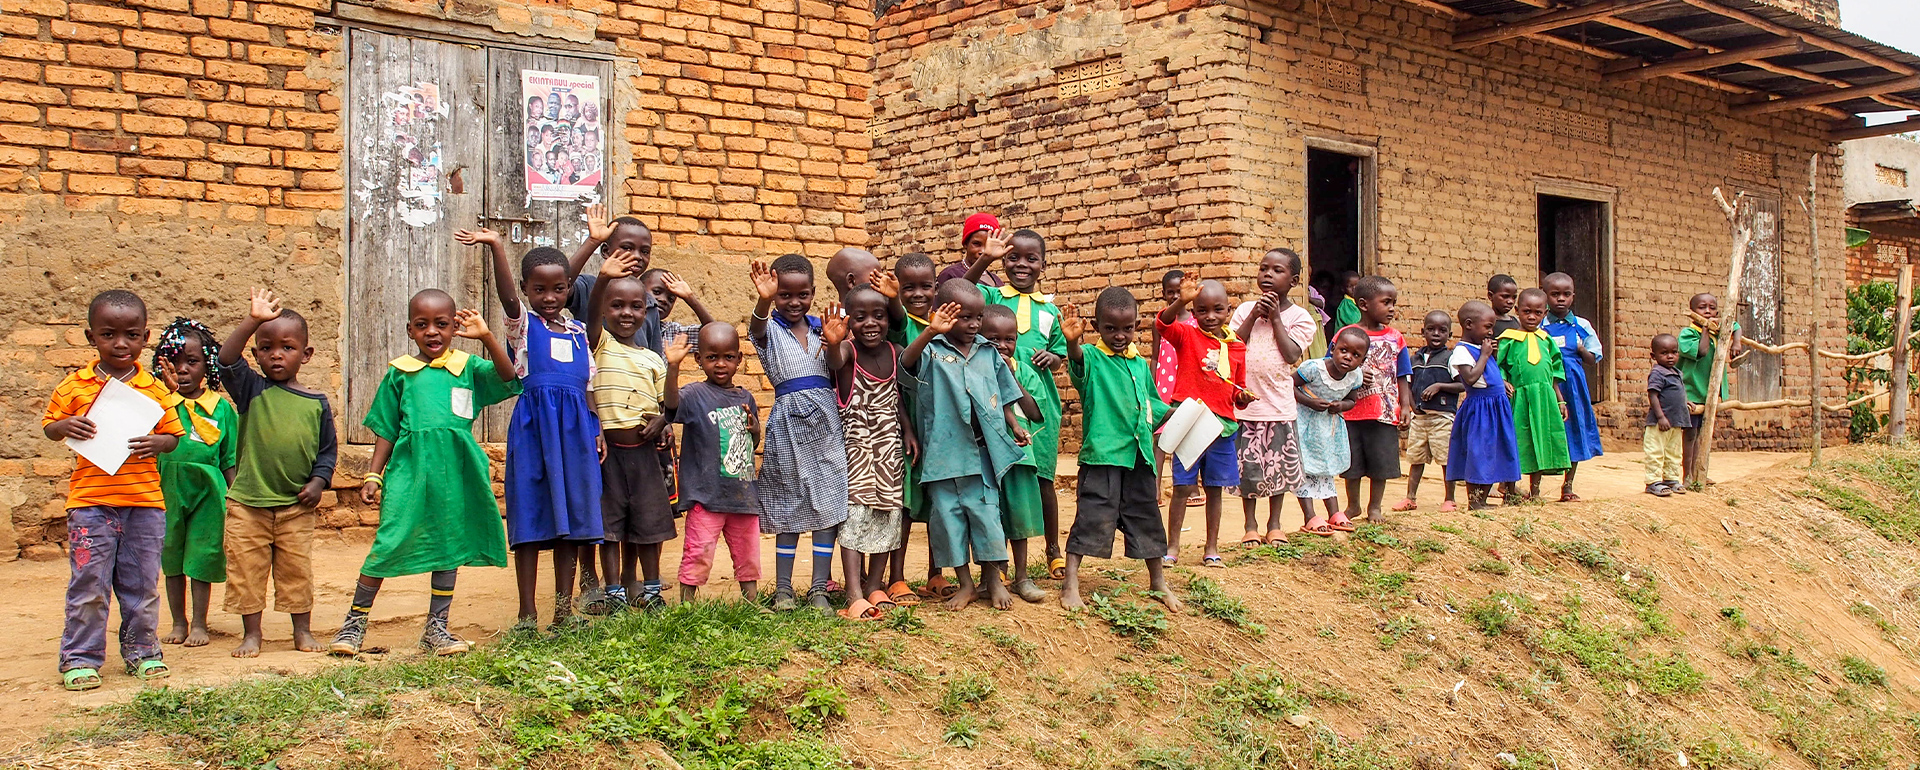 Reisebericht Radreise Uganda Ruanda